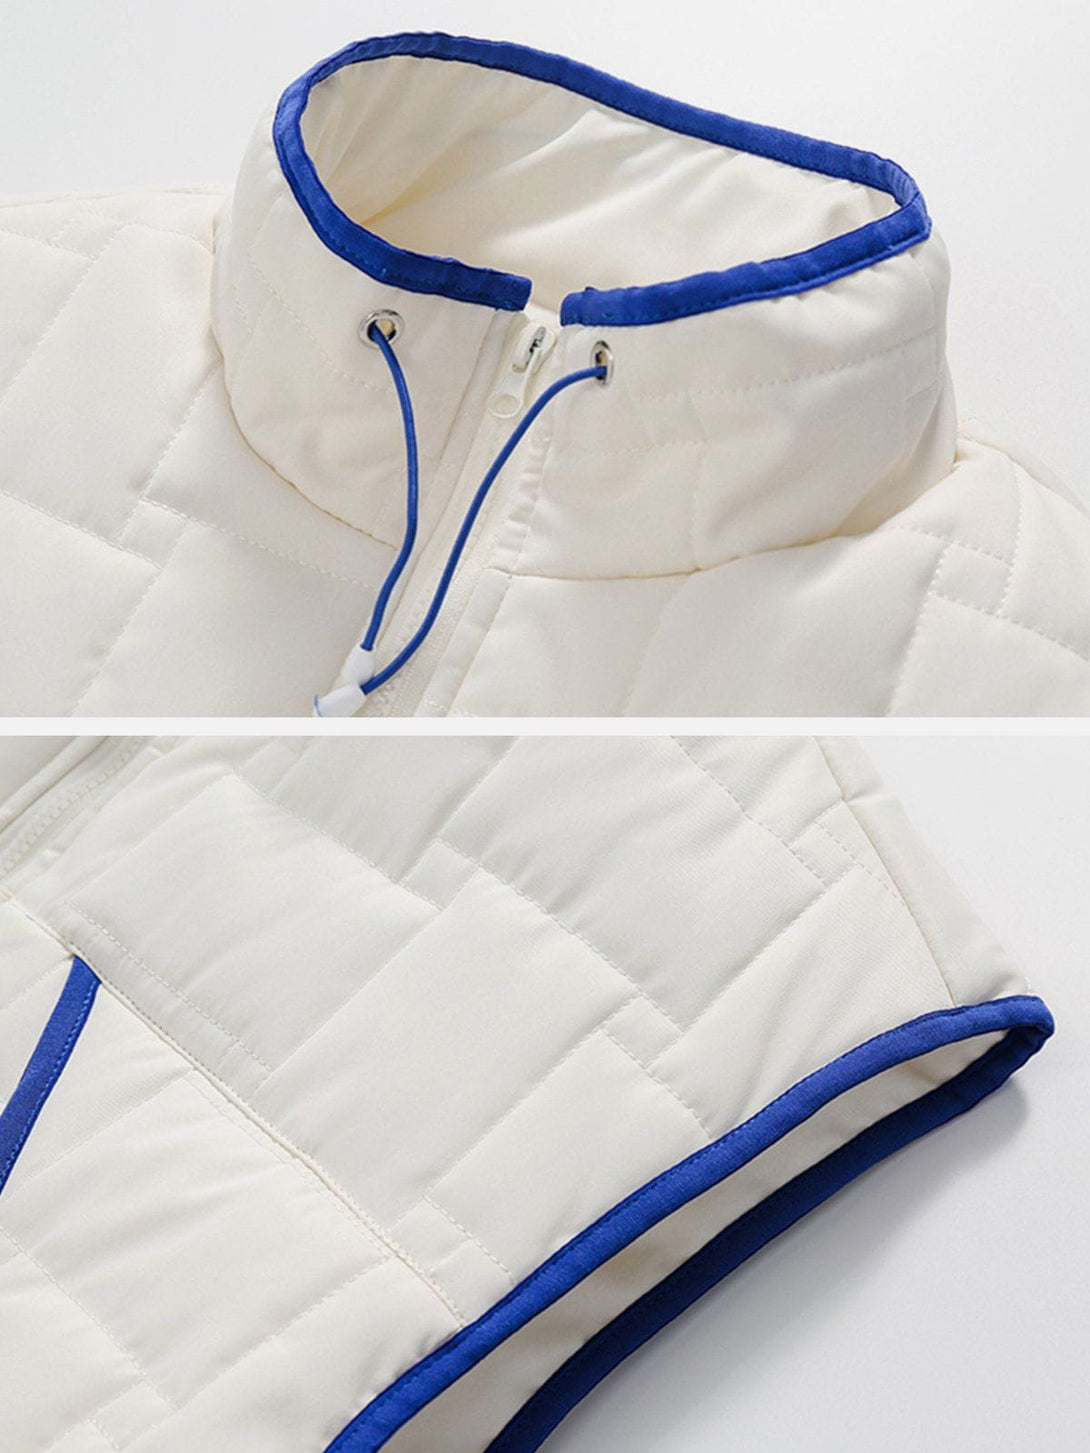 Levefly - Solid Color Puffer Vest Gilet - Streetwear Fashion - levefly.com